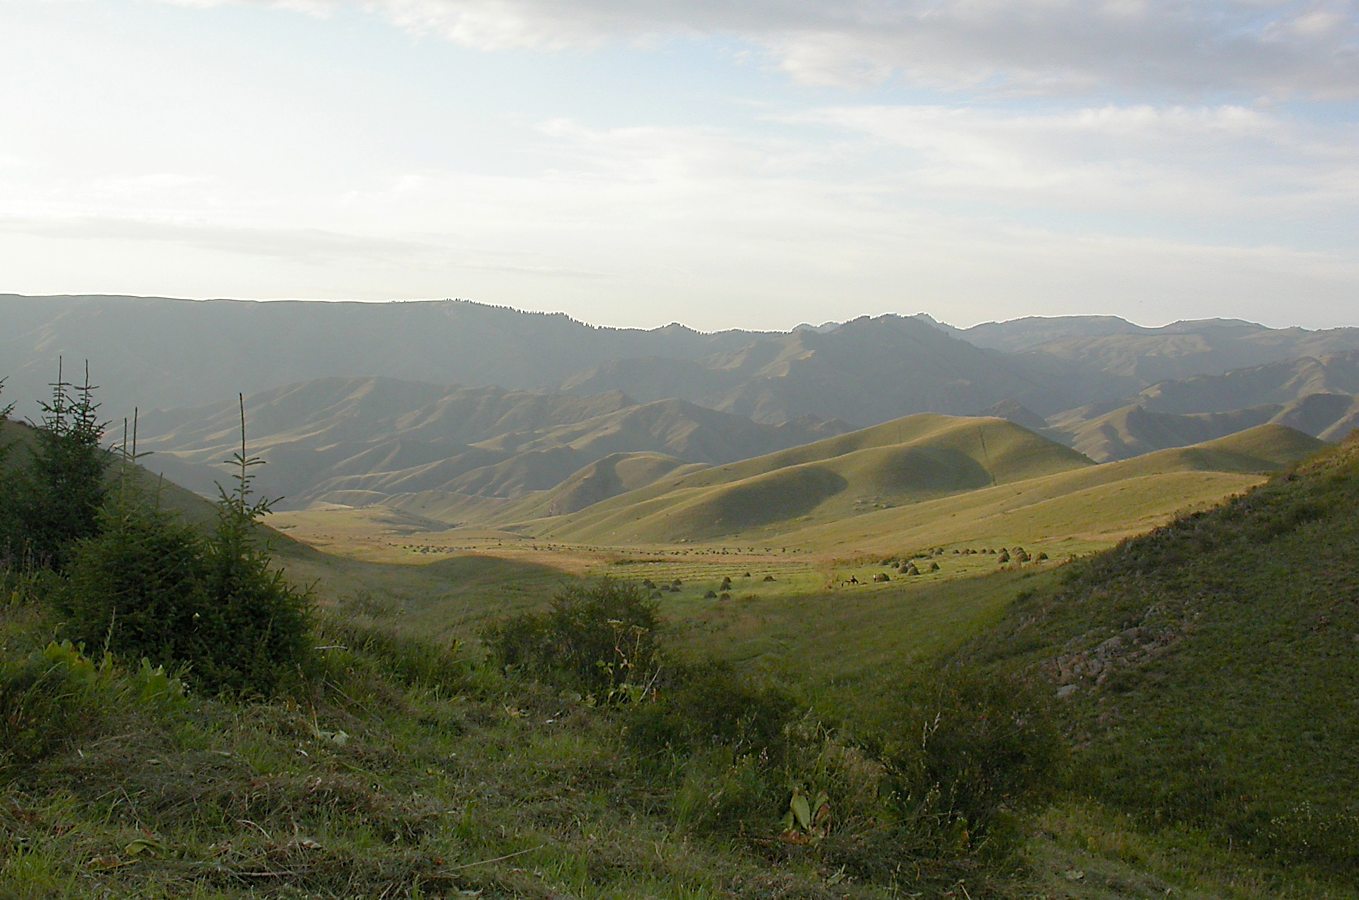 Туюк, image of landscape/habitat.